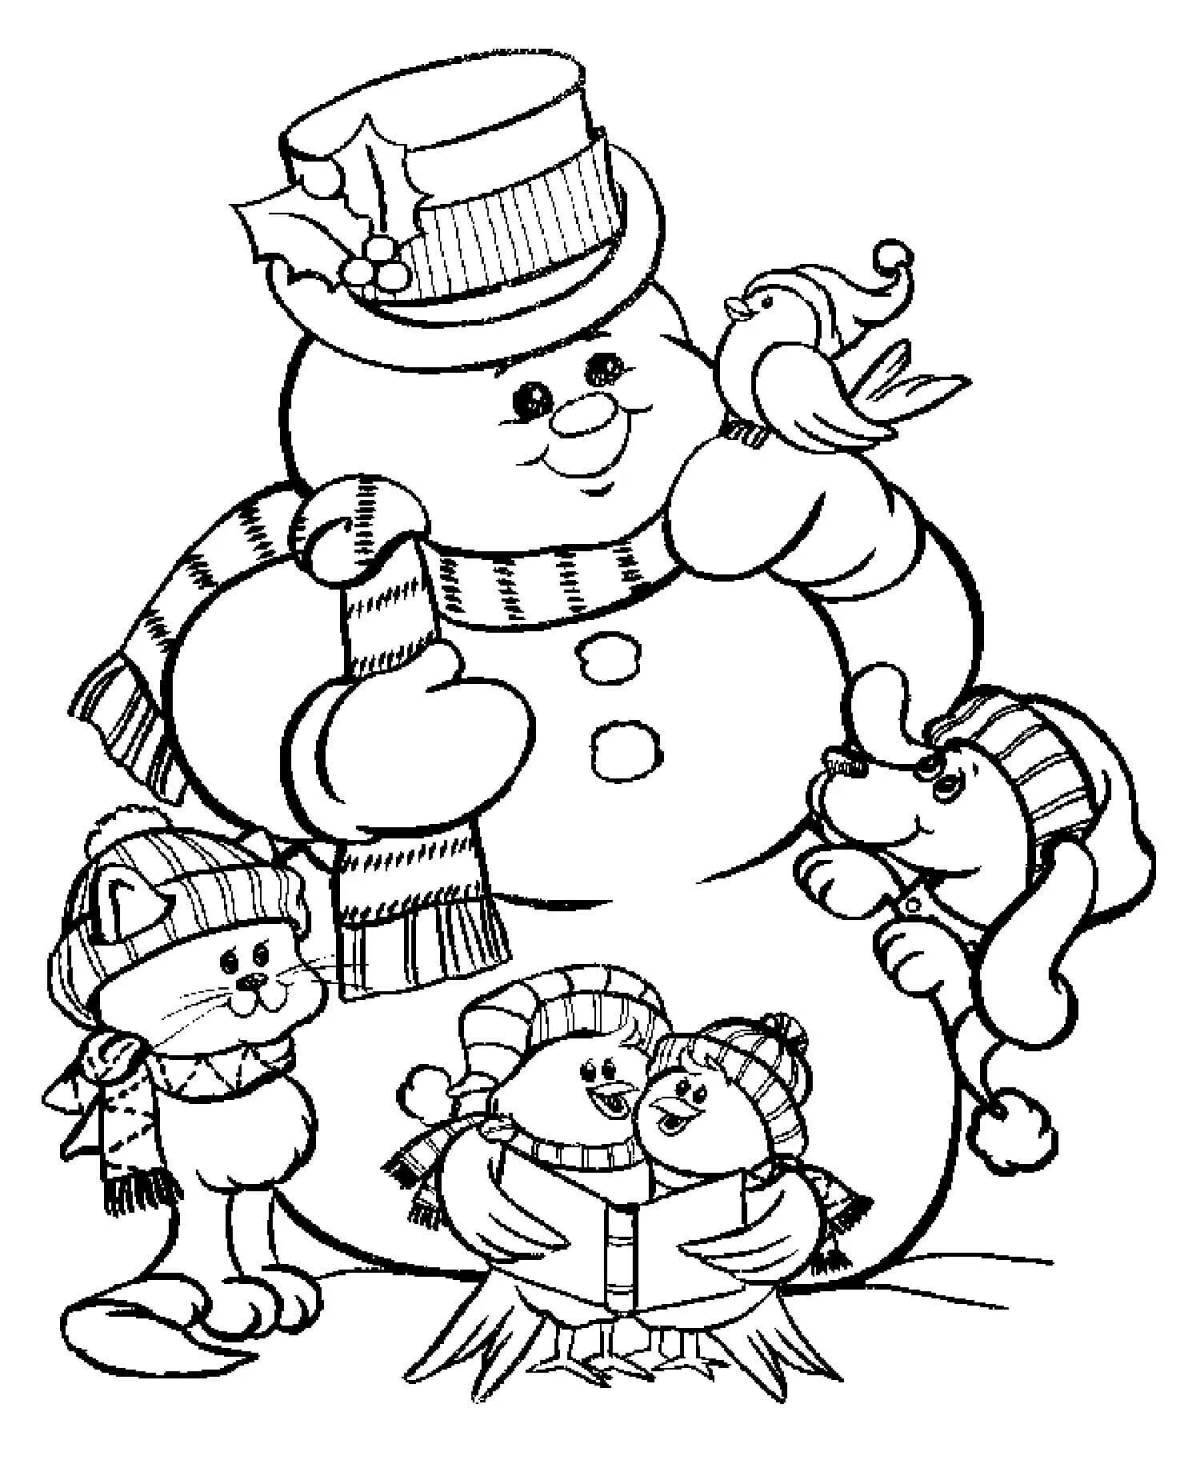 Happy snowman birthday coloring book